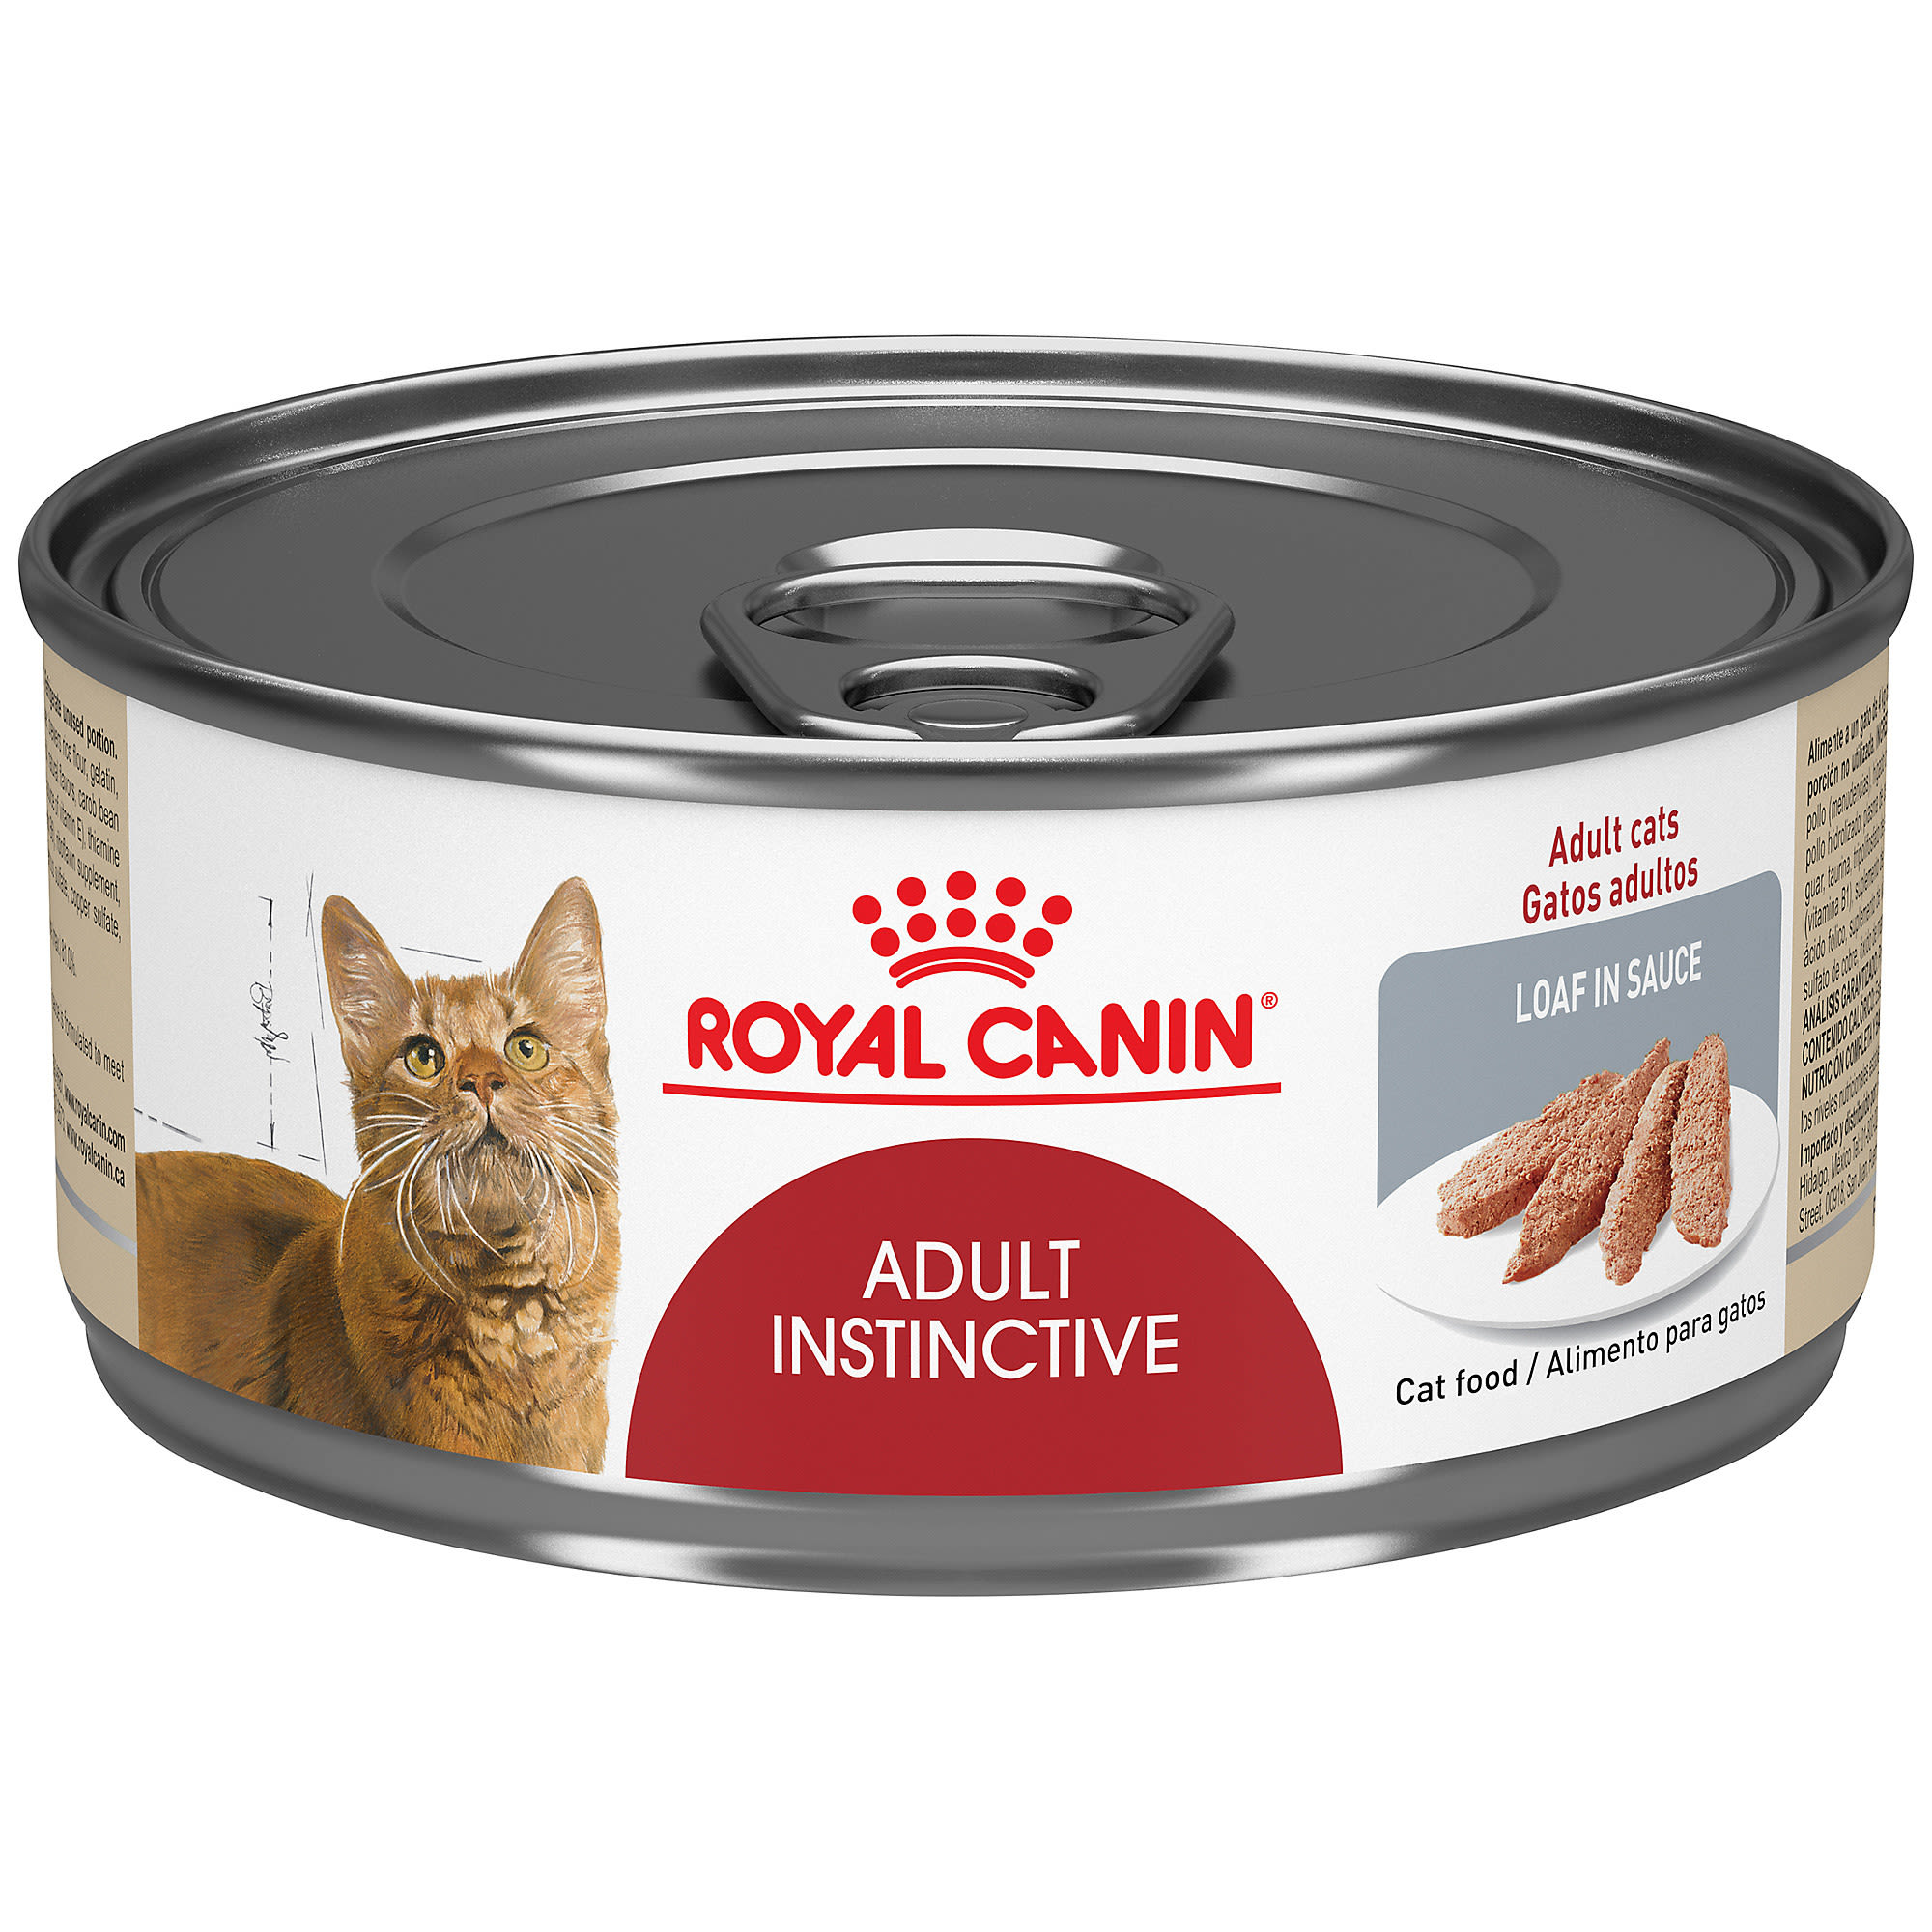 royal canin cat food recalls